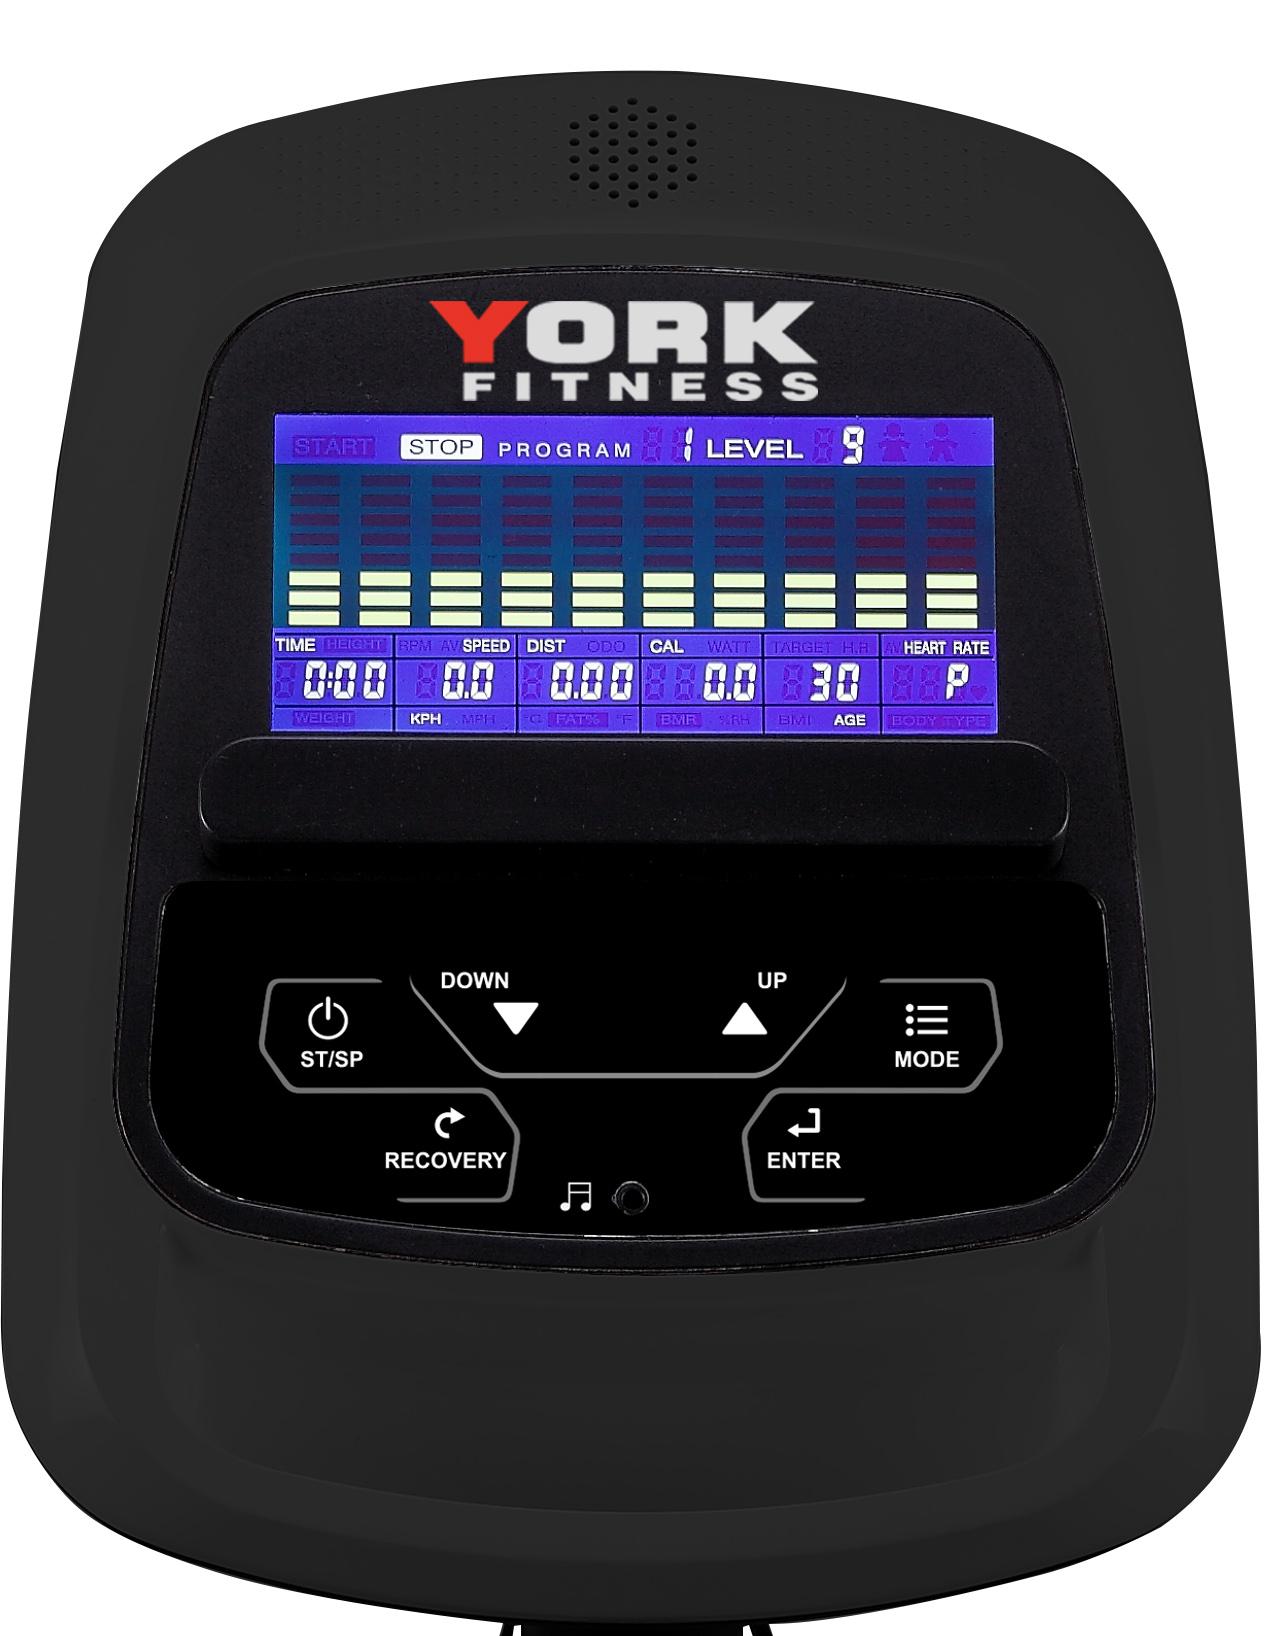 York Fitness X515 Cross Trainer Order online ZipPay